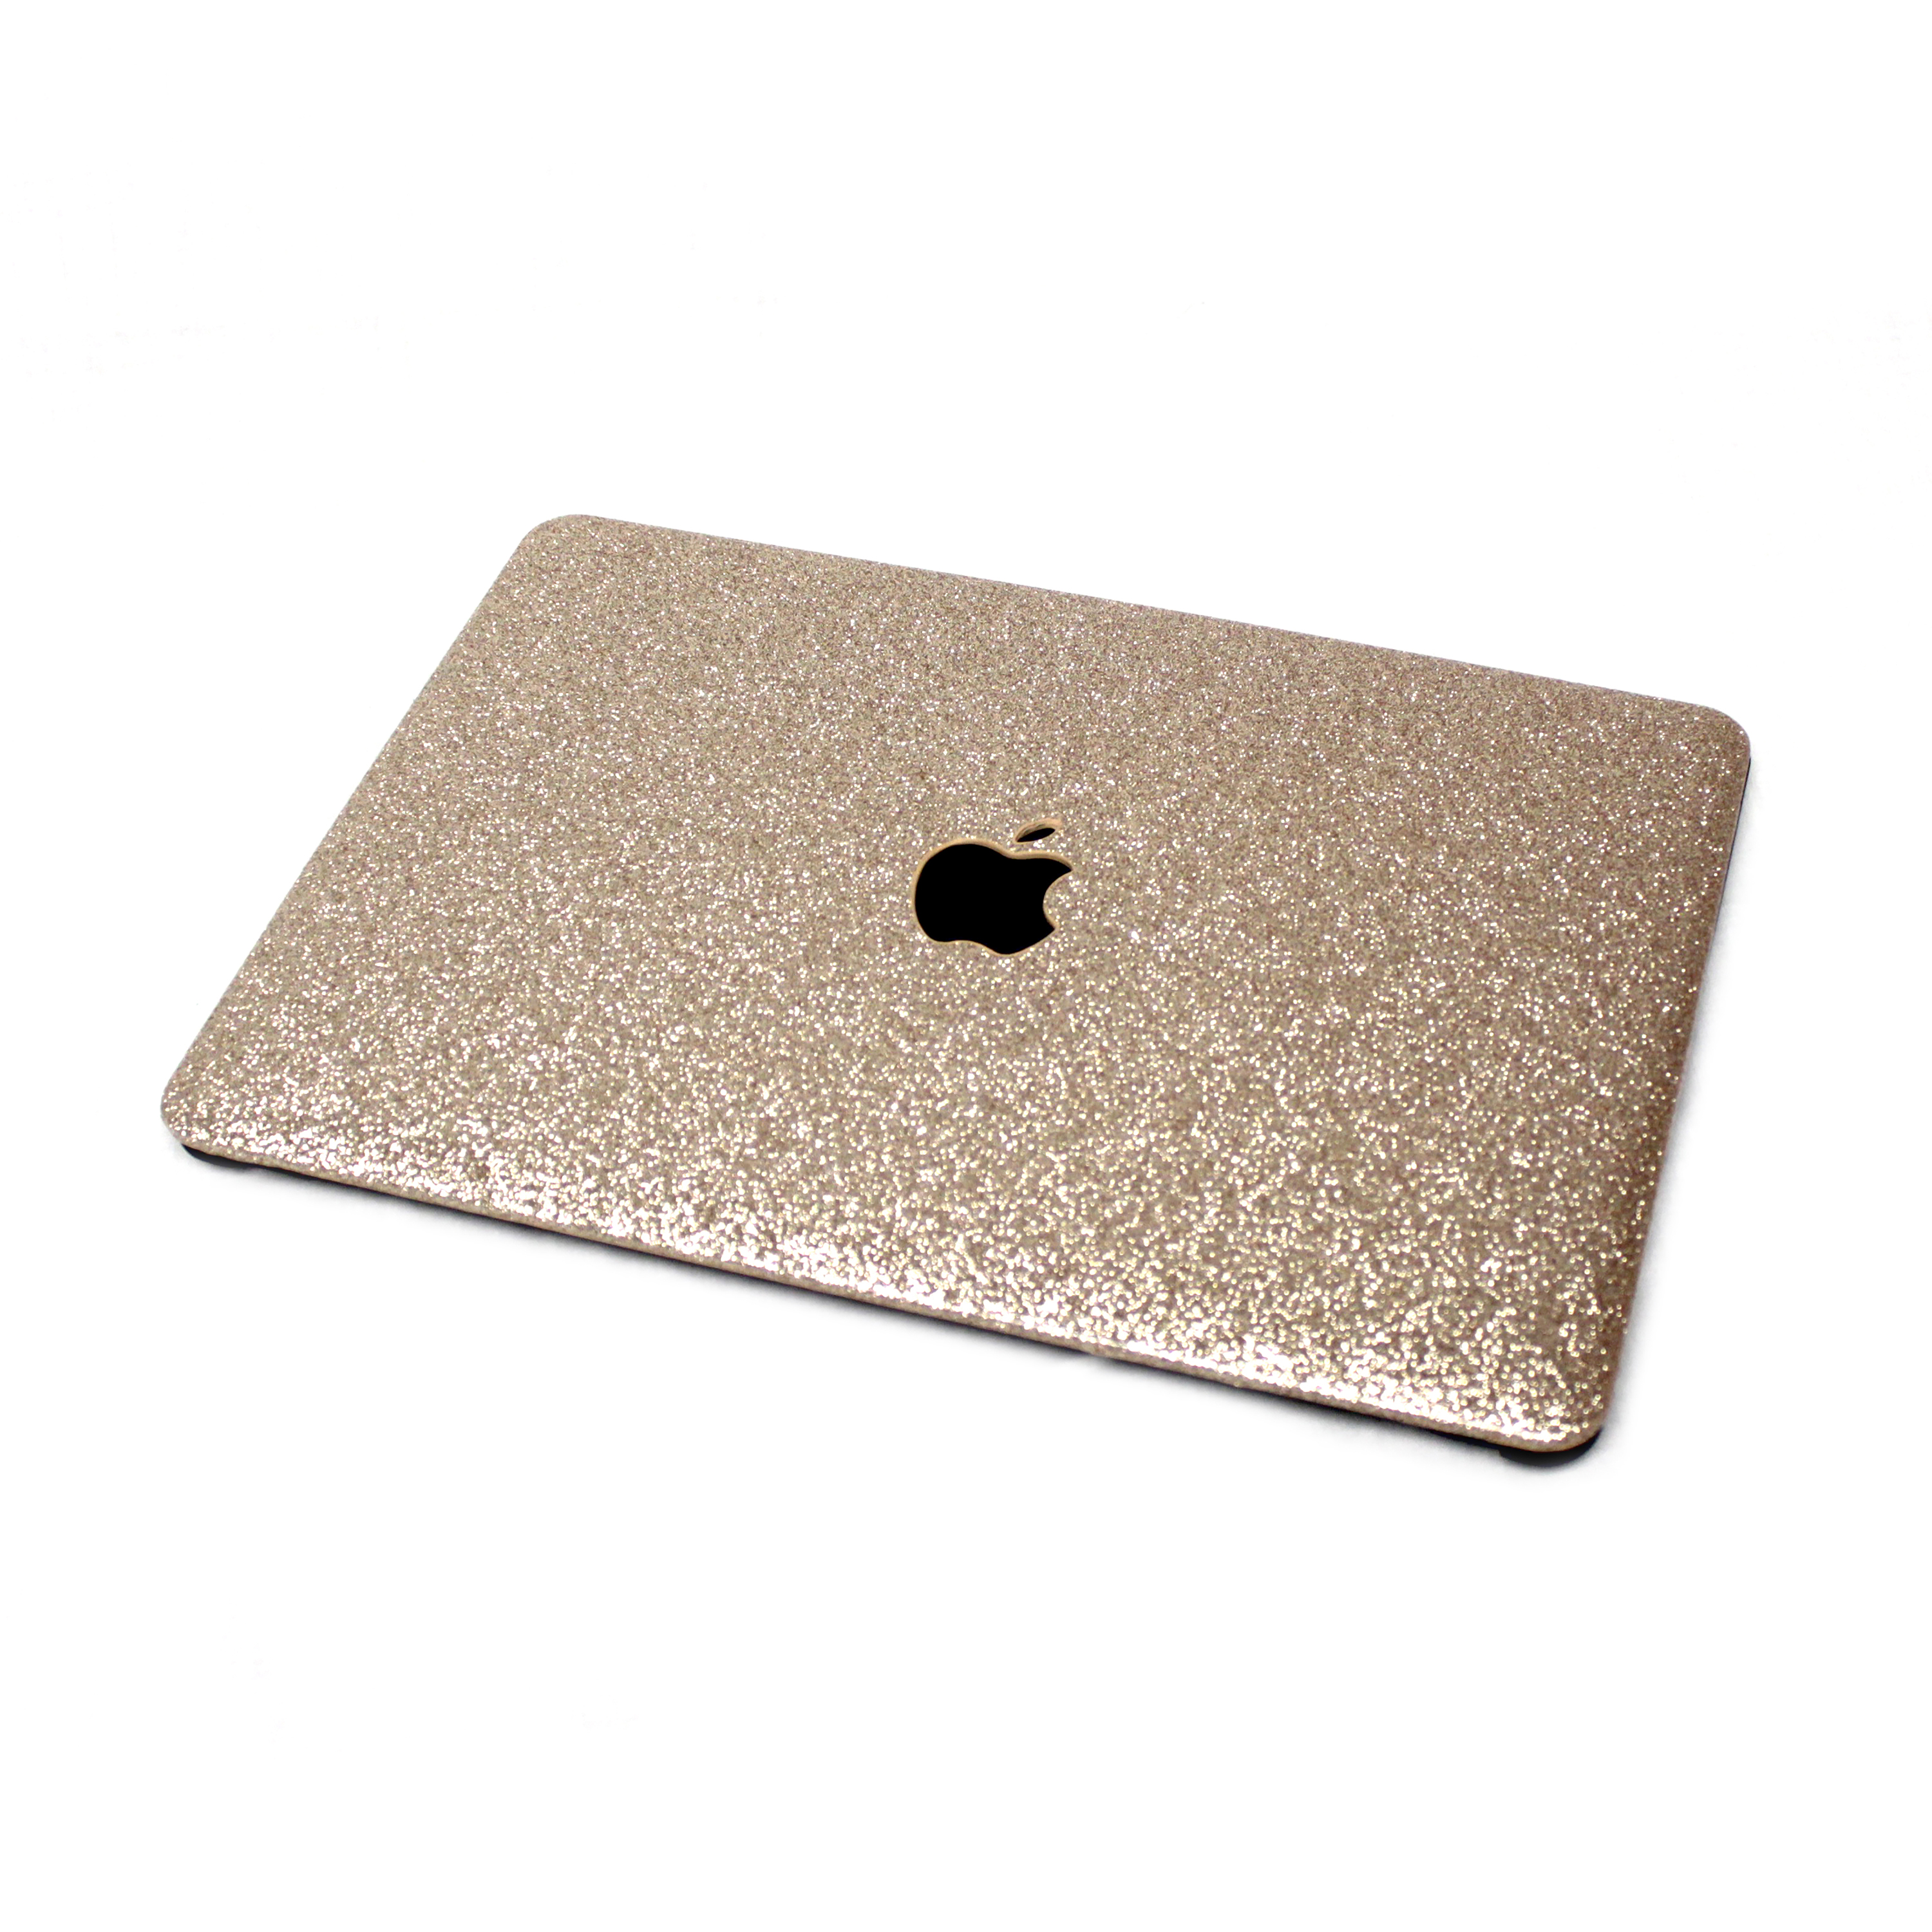 Gold Snake Macbook Case Snake Skin Macbook Pro 2019 Case Macbook Pro 13 Case Macbook Pro 15 Hard Shell Macbook Air 13 2018 Cover Macbook 12 Inch Sleeve Macbook Air 11 Case PP2045